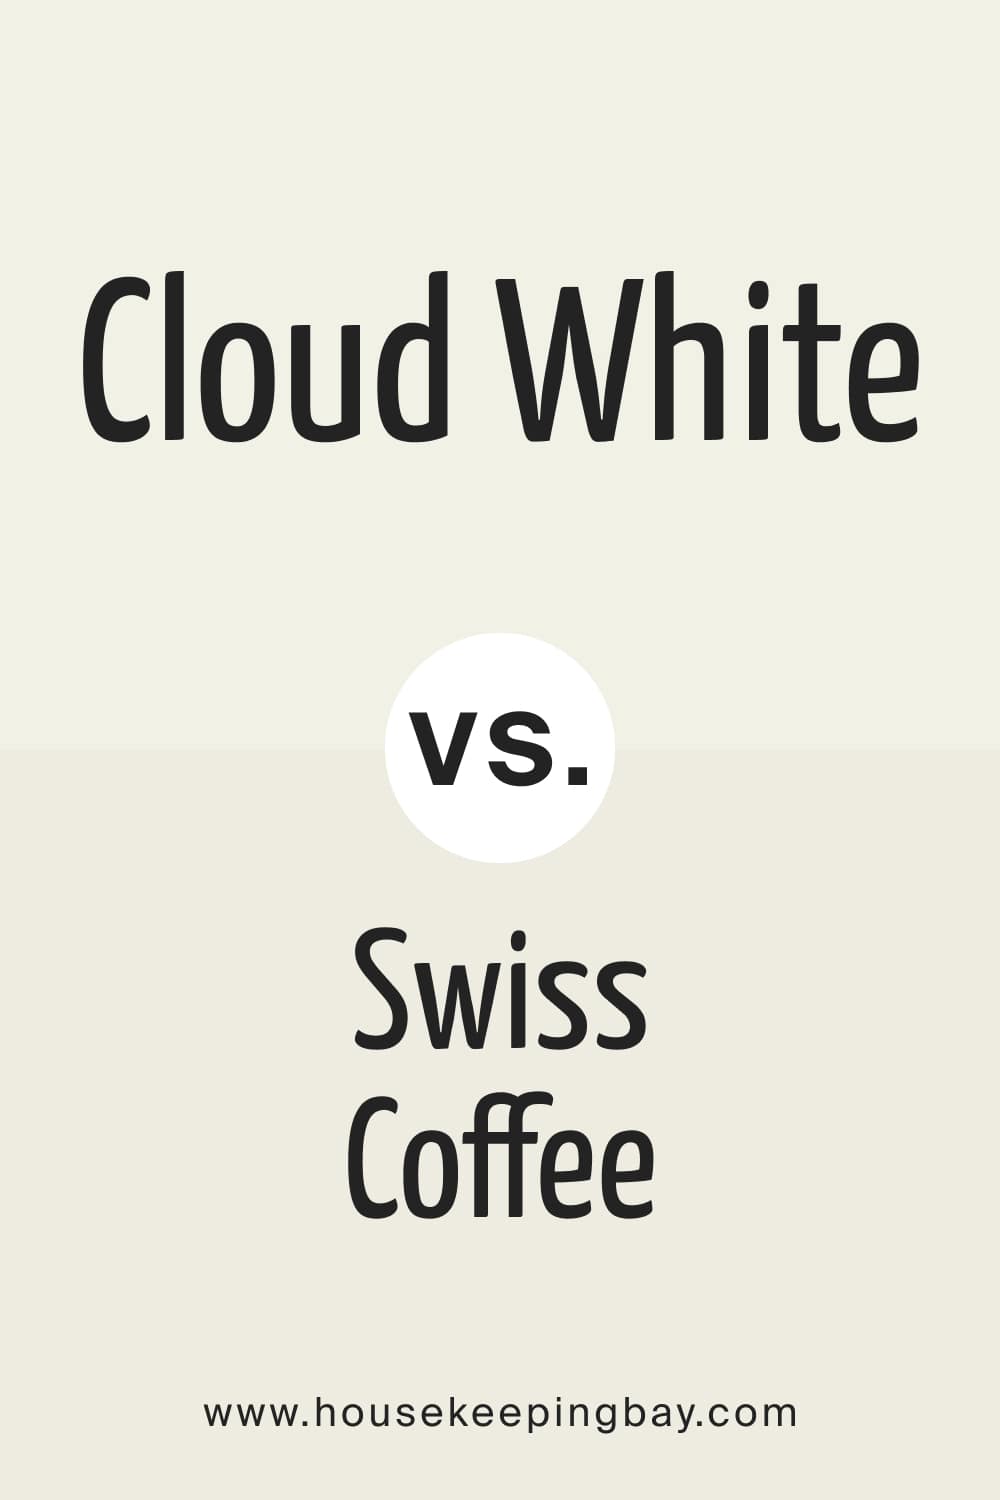 Cloud White vs. Swiss Coffee